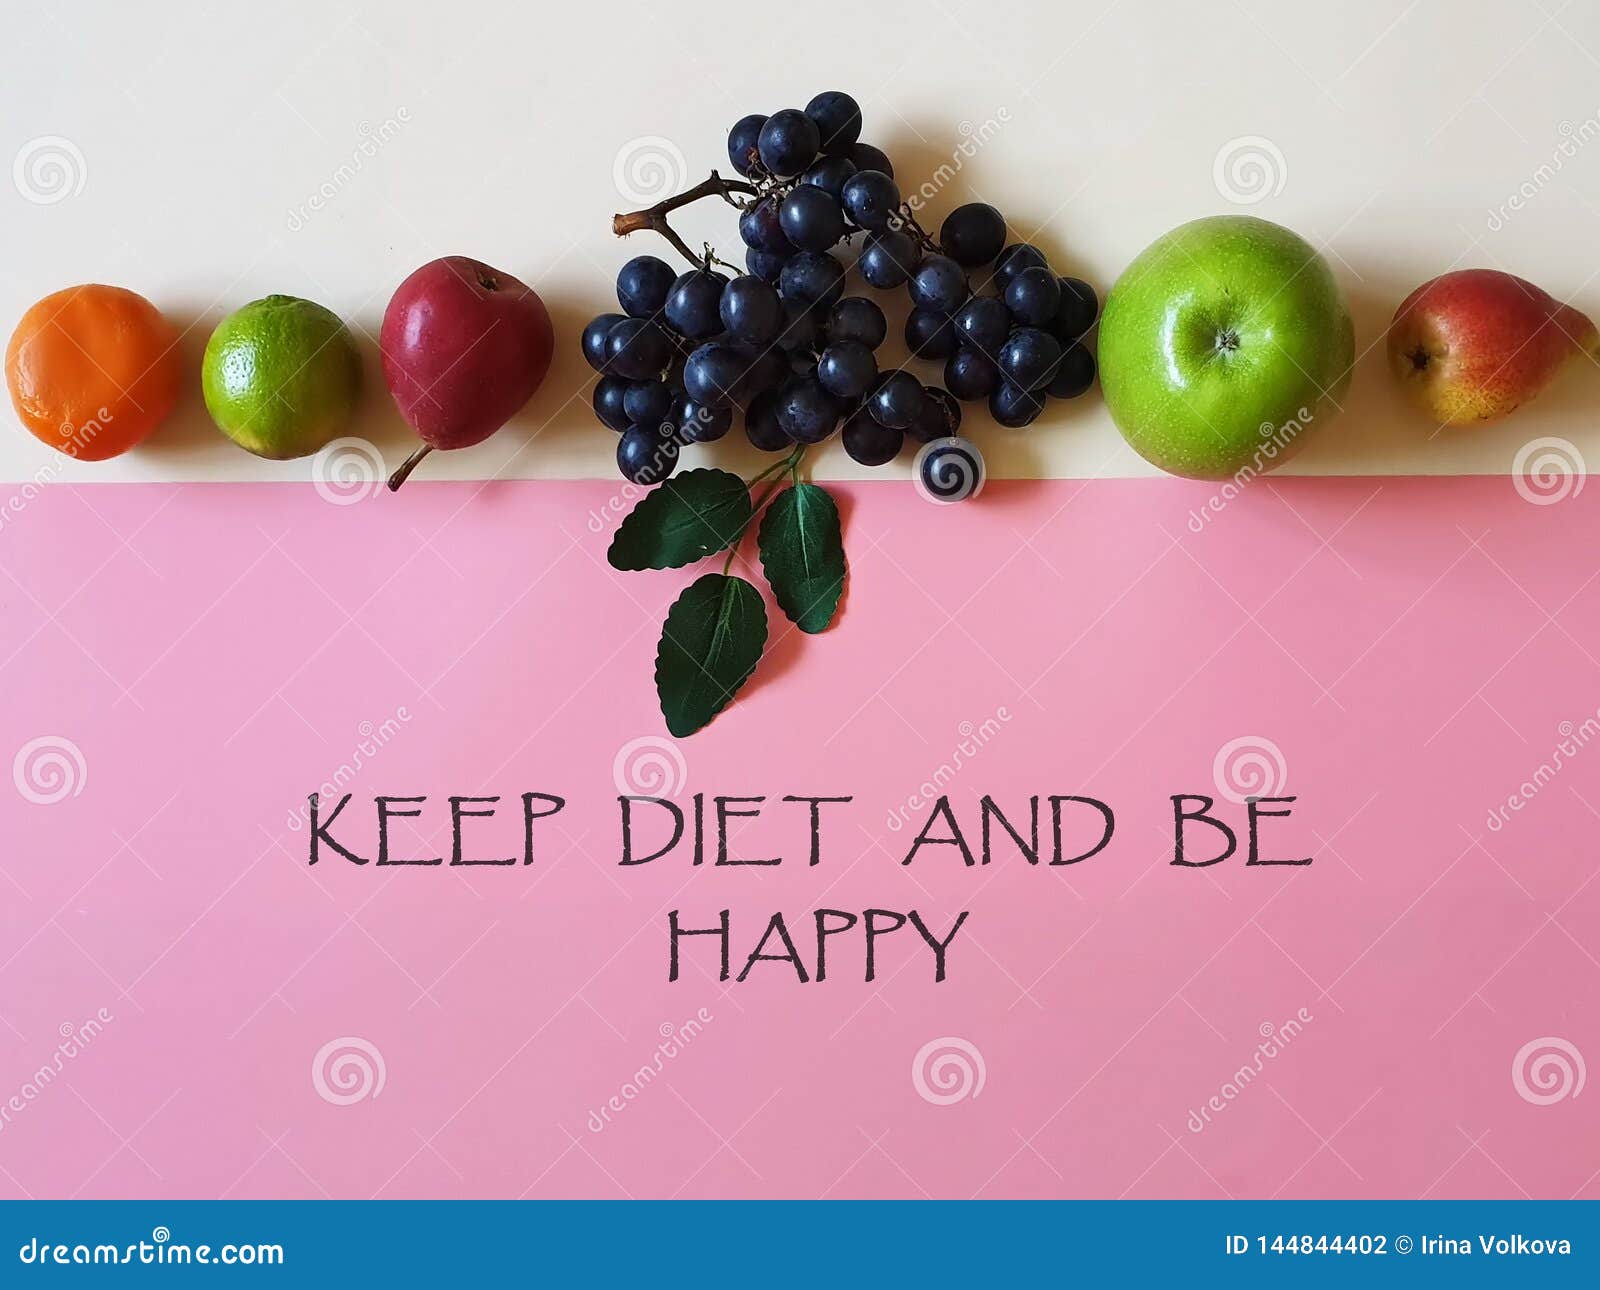 Keep a diet. Канапе яблоко+мандарин+груша.